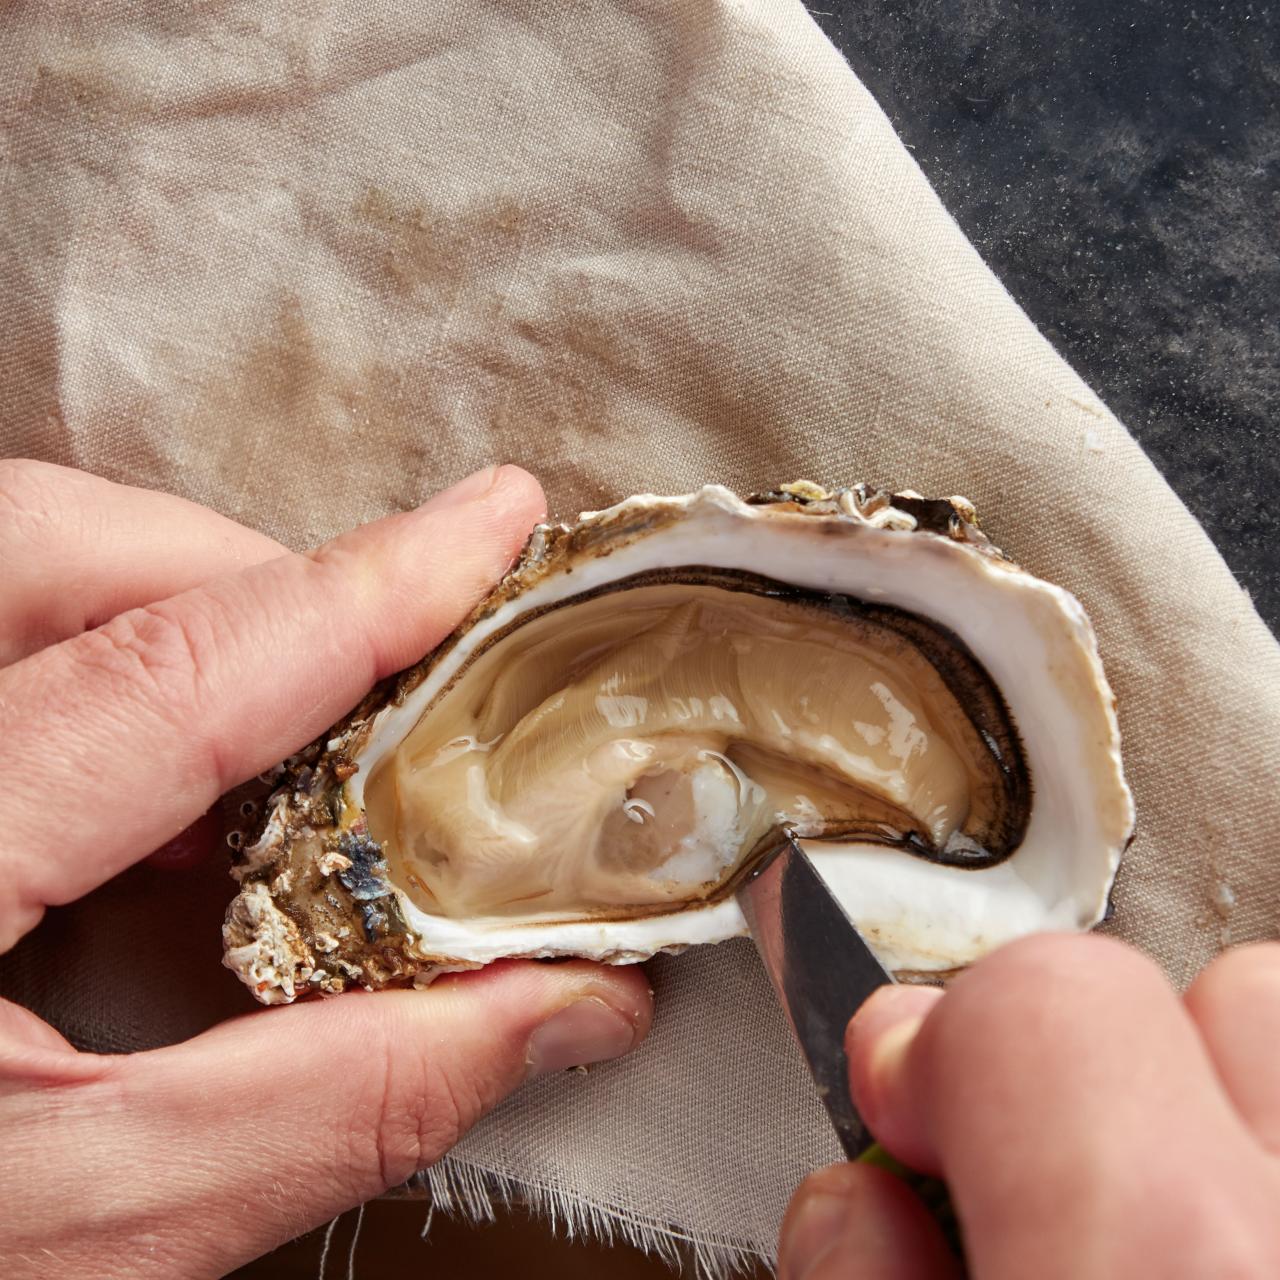 https://food.fnr.sndimg.com/content/dam/images/food/fullset/2021/12/15/oyster-opening-knife-hand-cutting-bottom-adductor-muscle-linen.jpg.rend.hgtvcom.1280.1280.suffix/1639598353215.jpeg